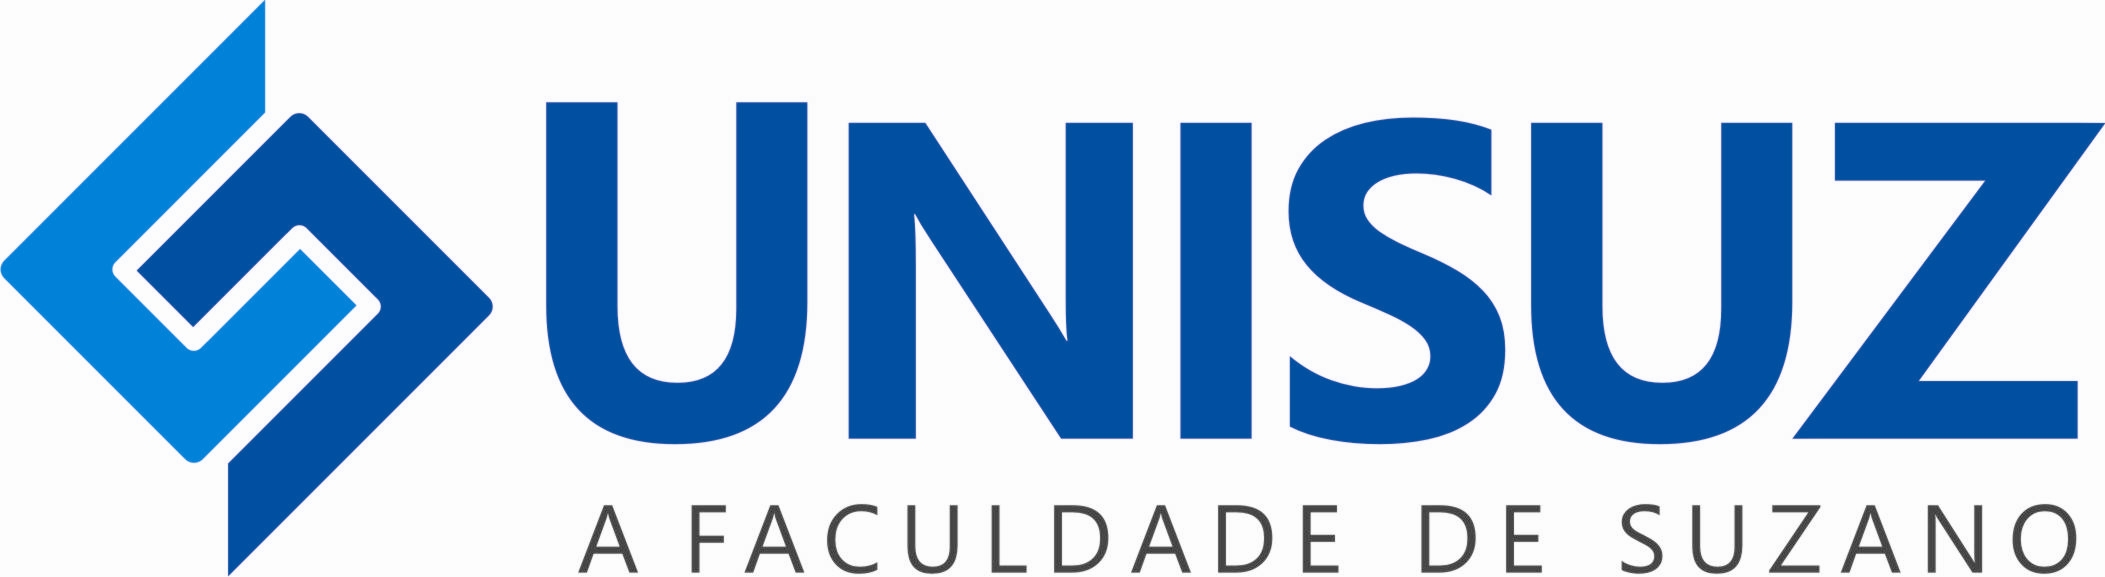 Colégio Unisuz Logo photo - 1